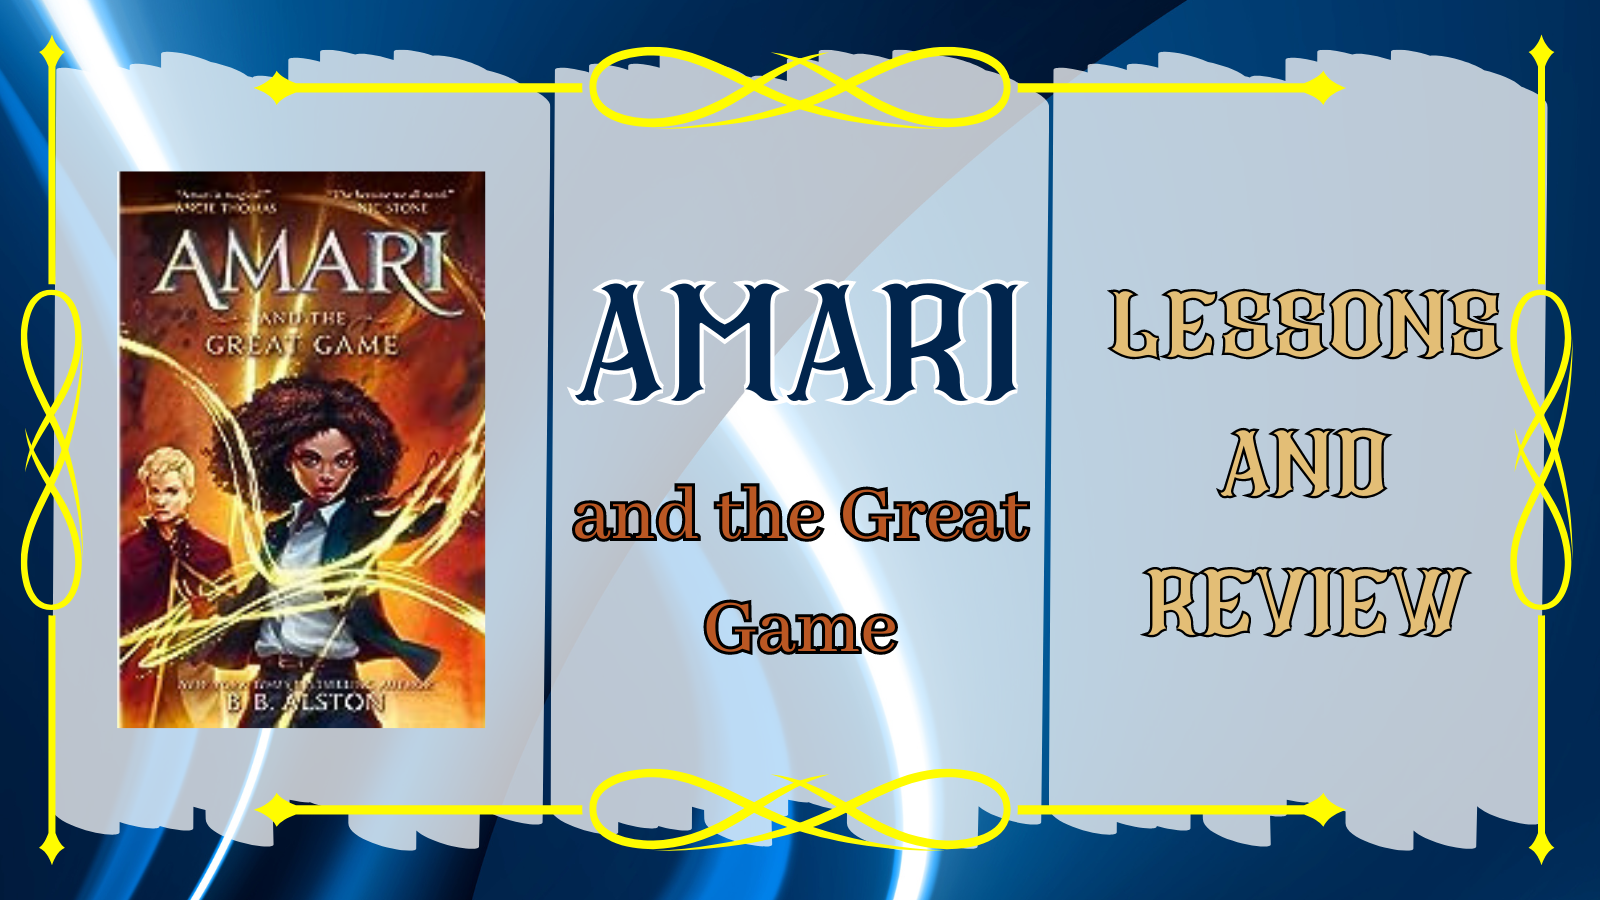 The Amari Series Book 2